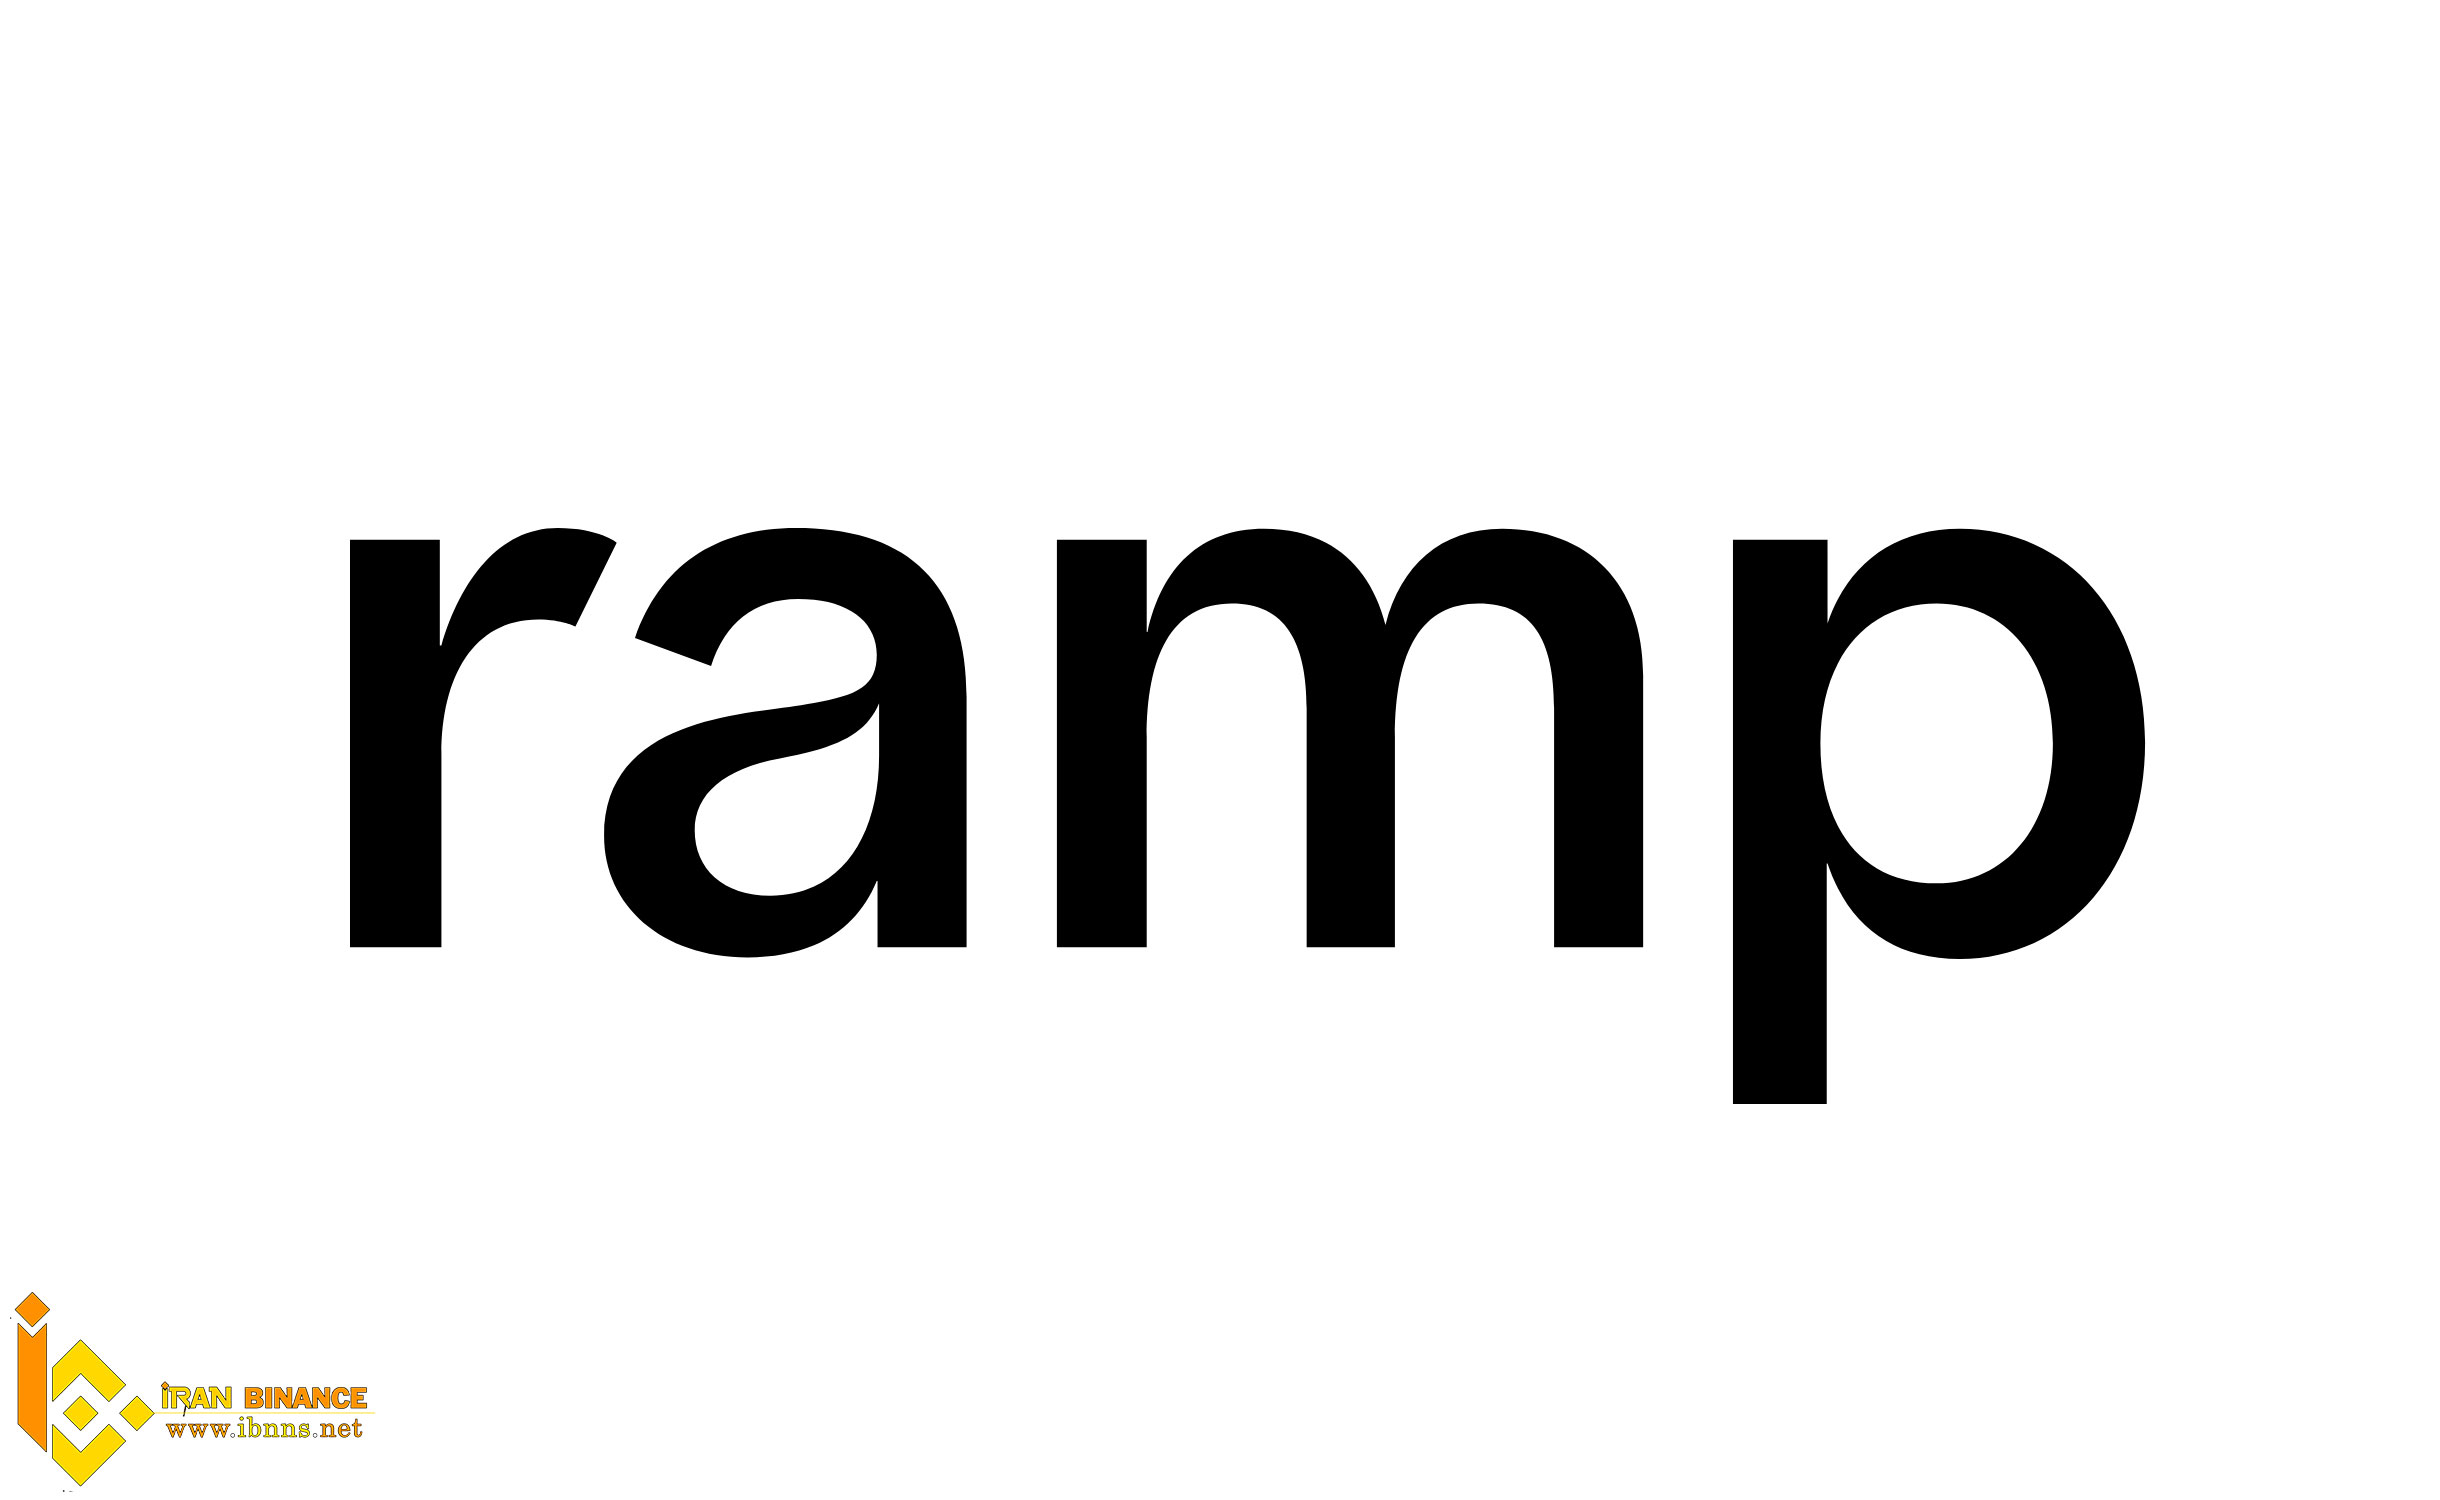 RAMP